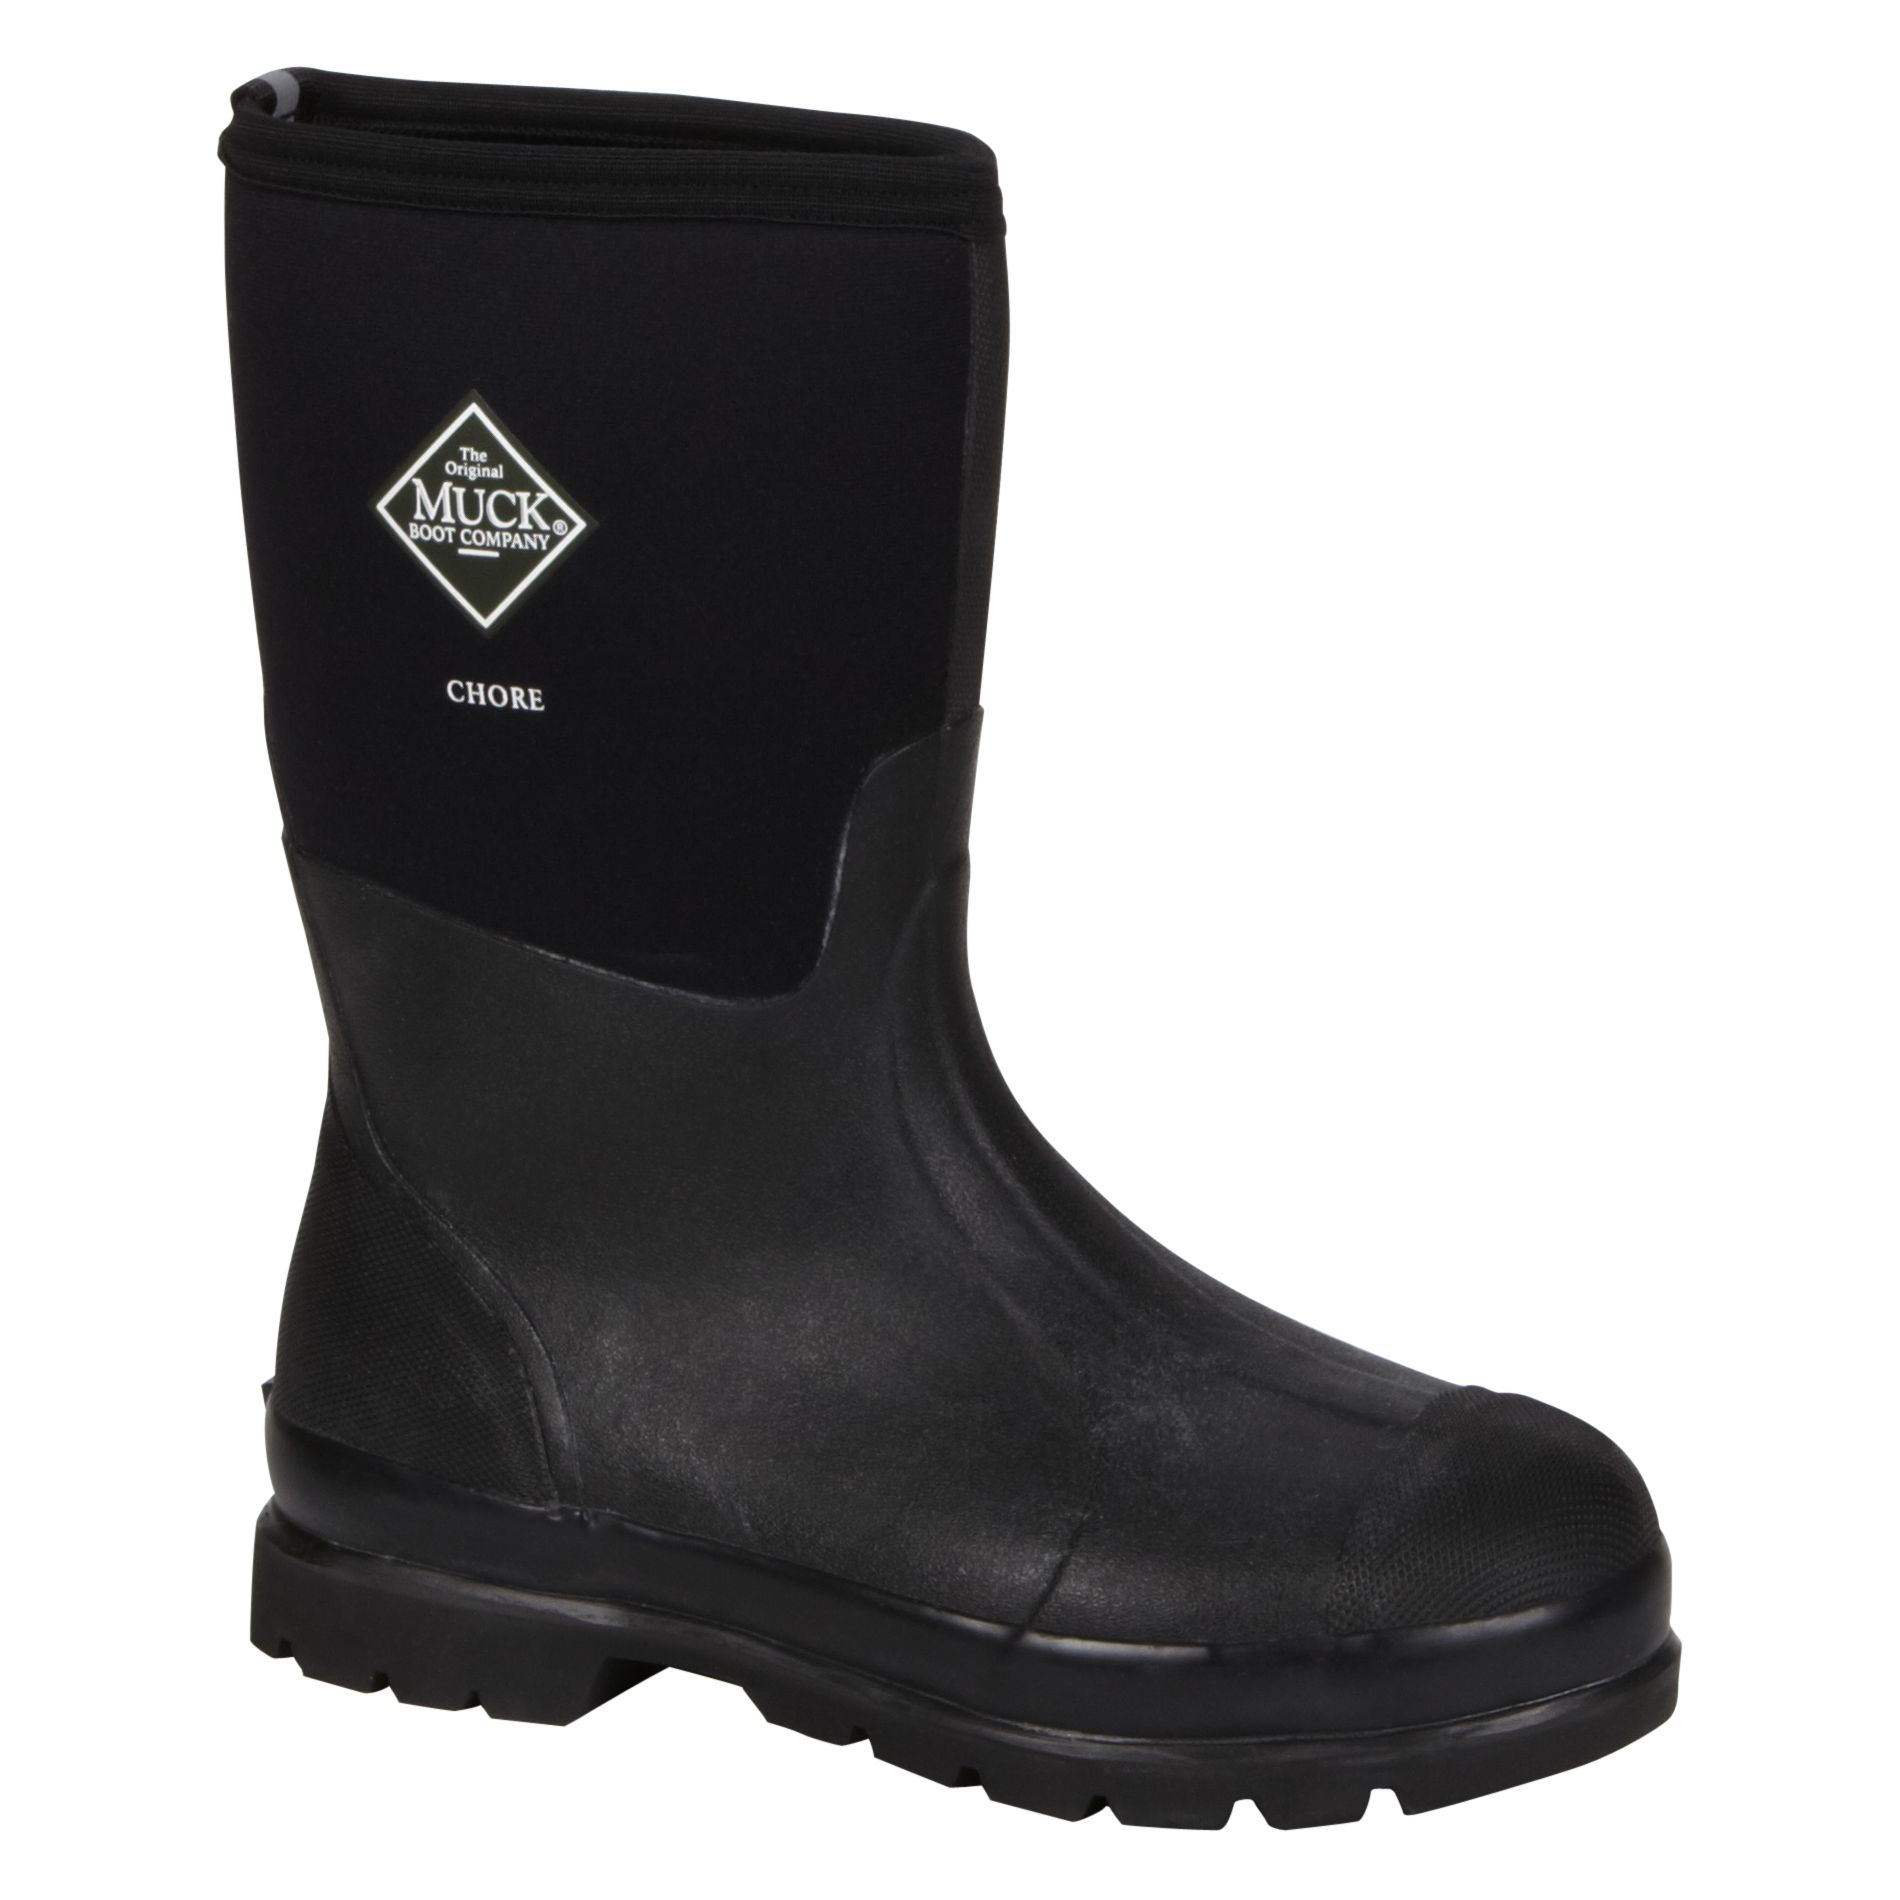 The Original Muck Boot Company Men's Chore Mid Waterproof Work Boot - Black